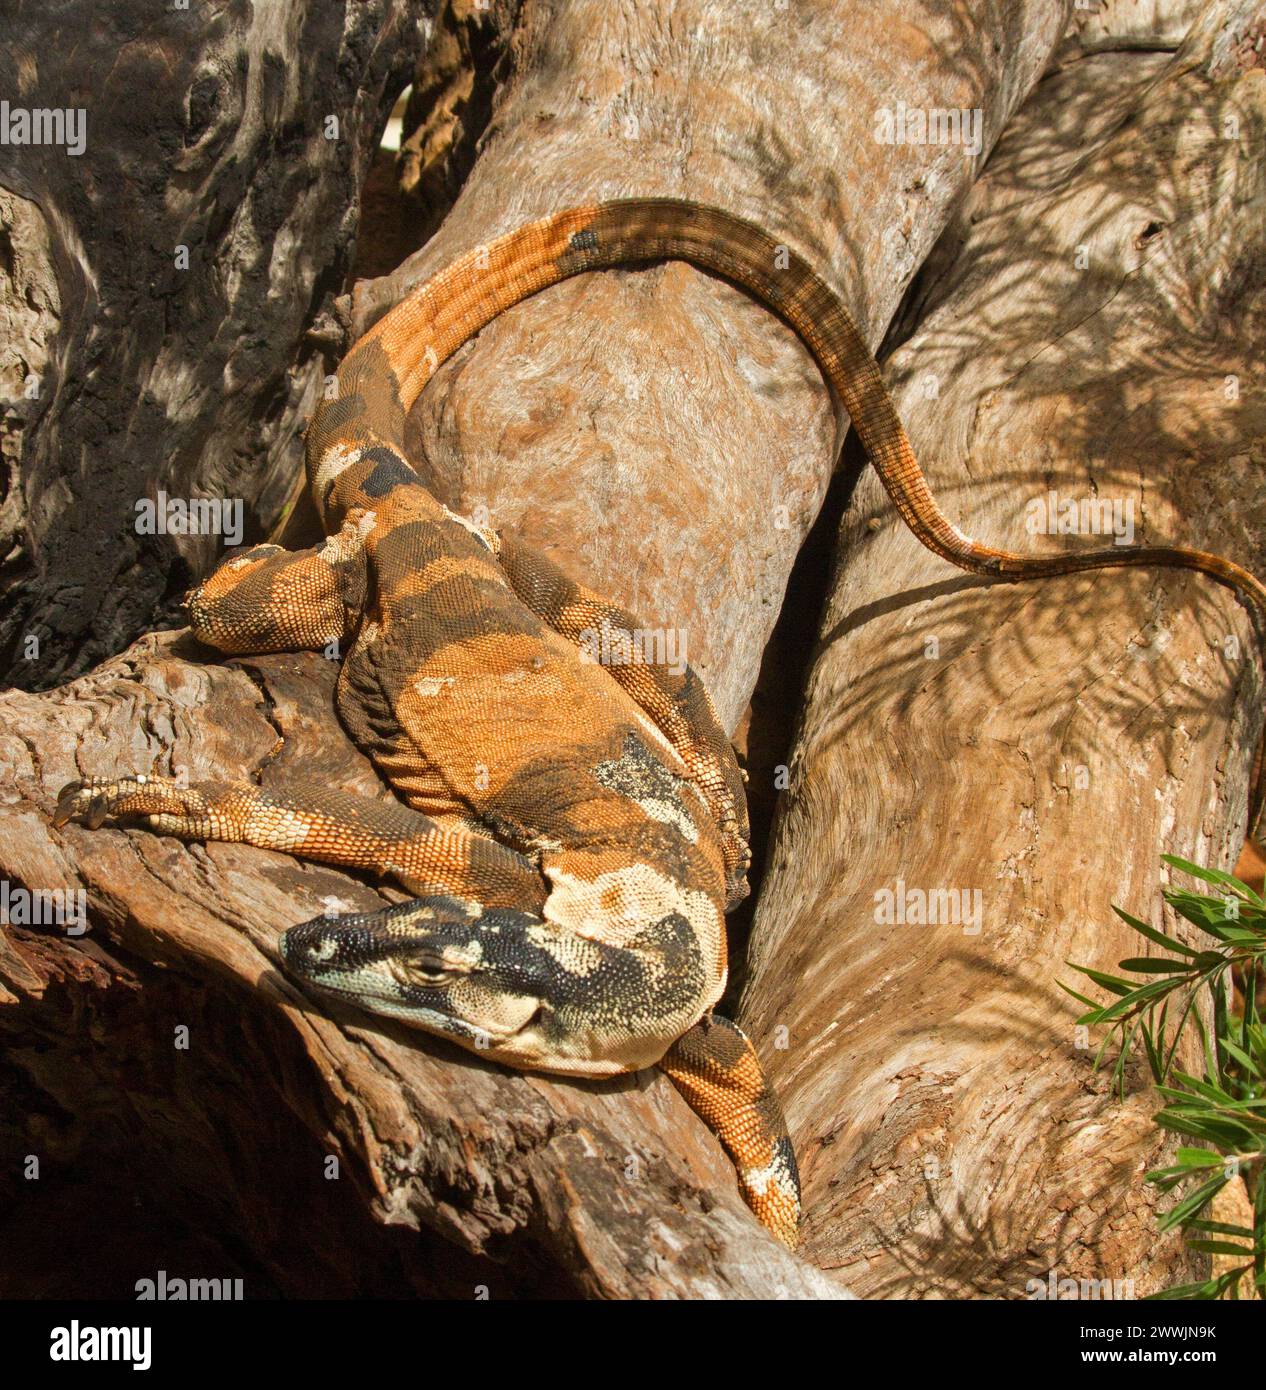 Lucertola australiana, Lace monitor / Goanna - Varanus varius 'forma campane' su un tronco Foto Stock